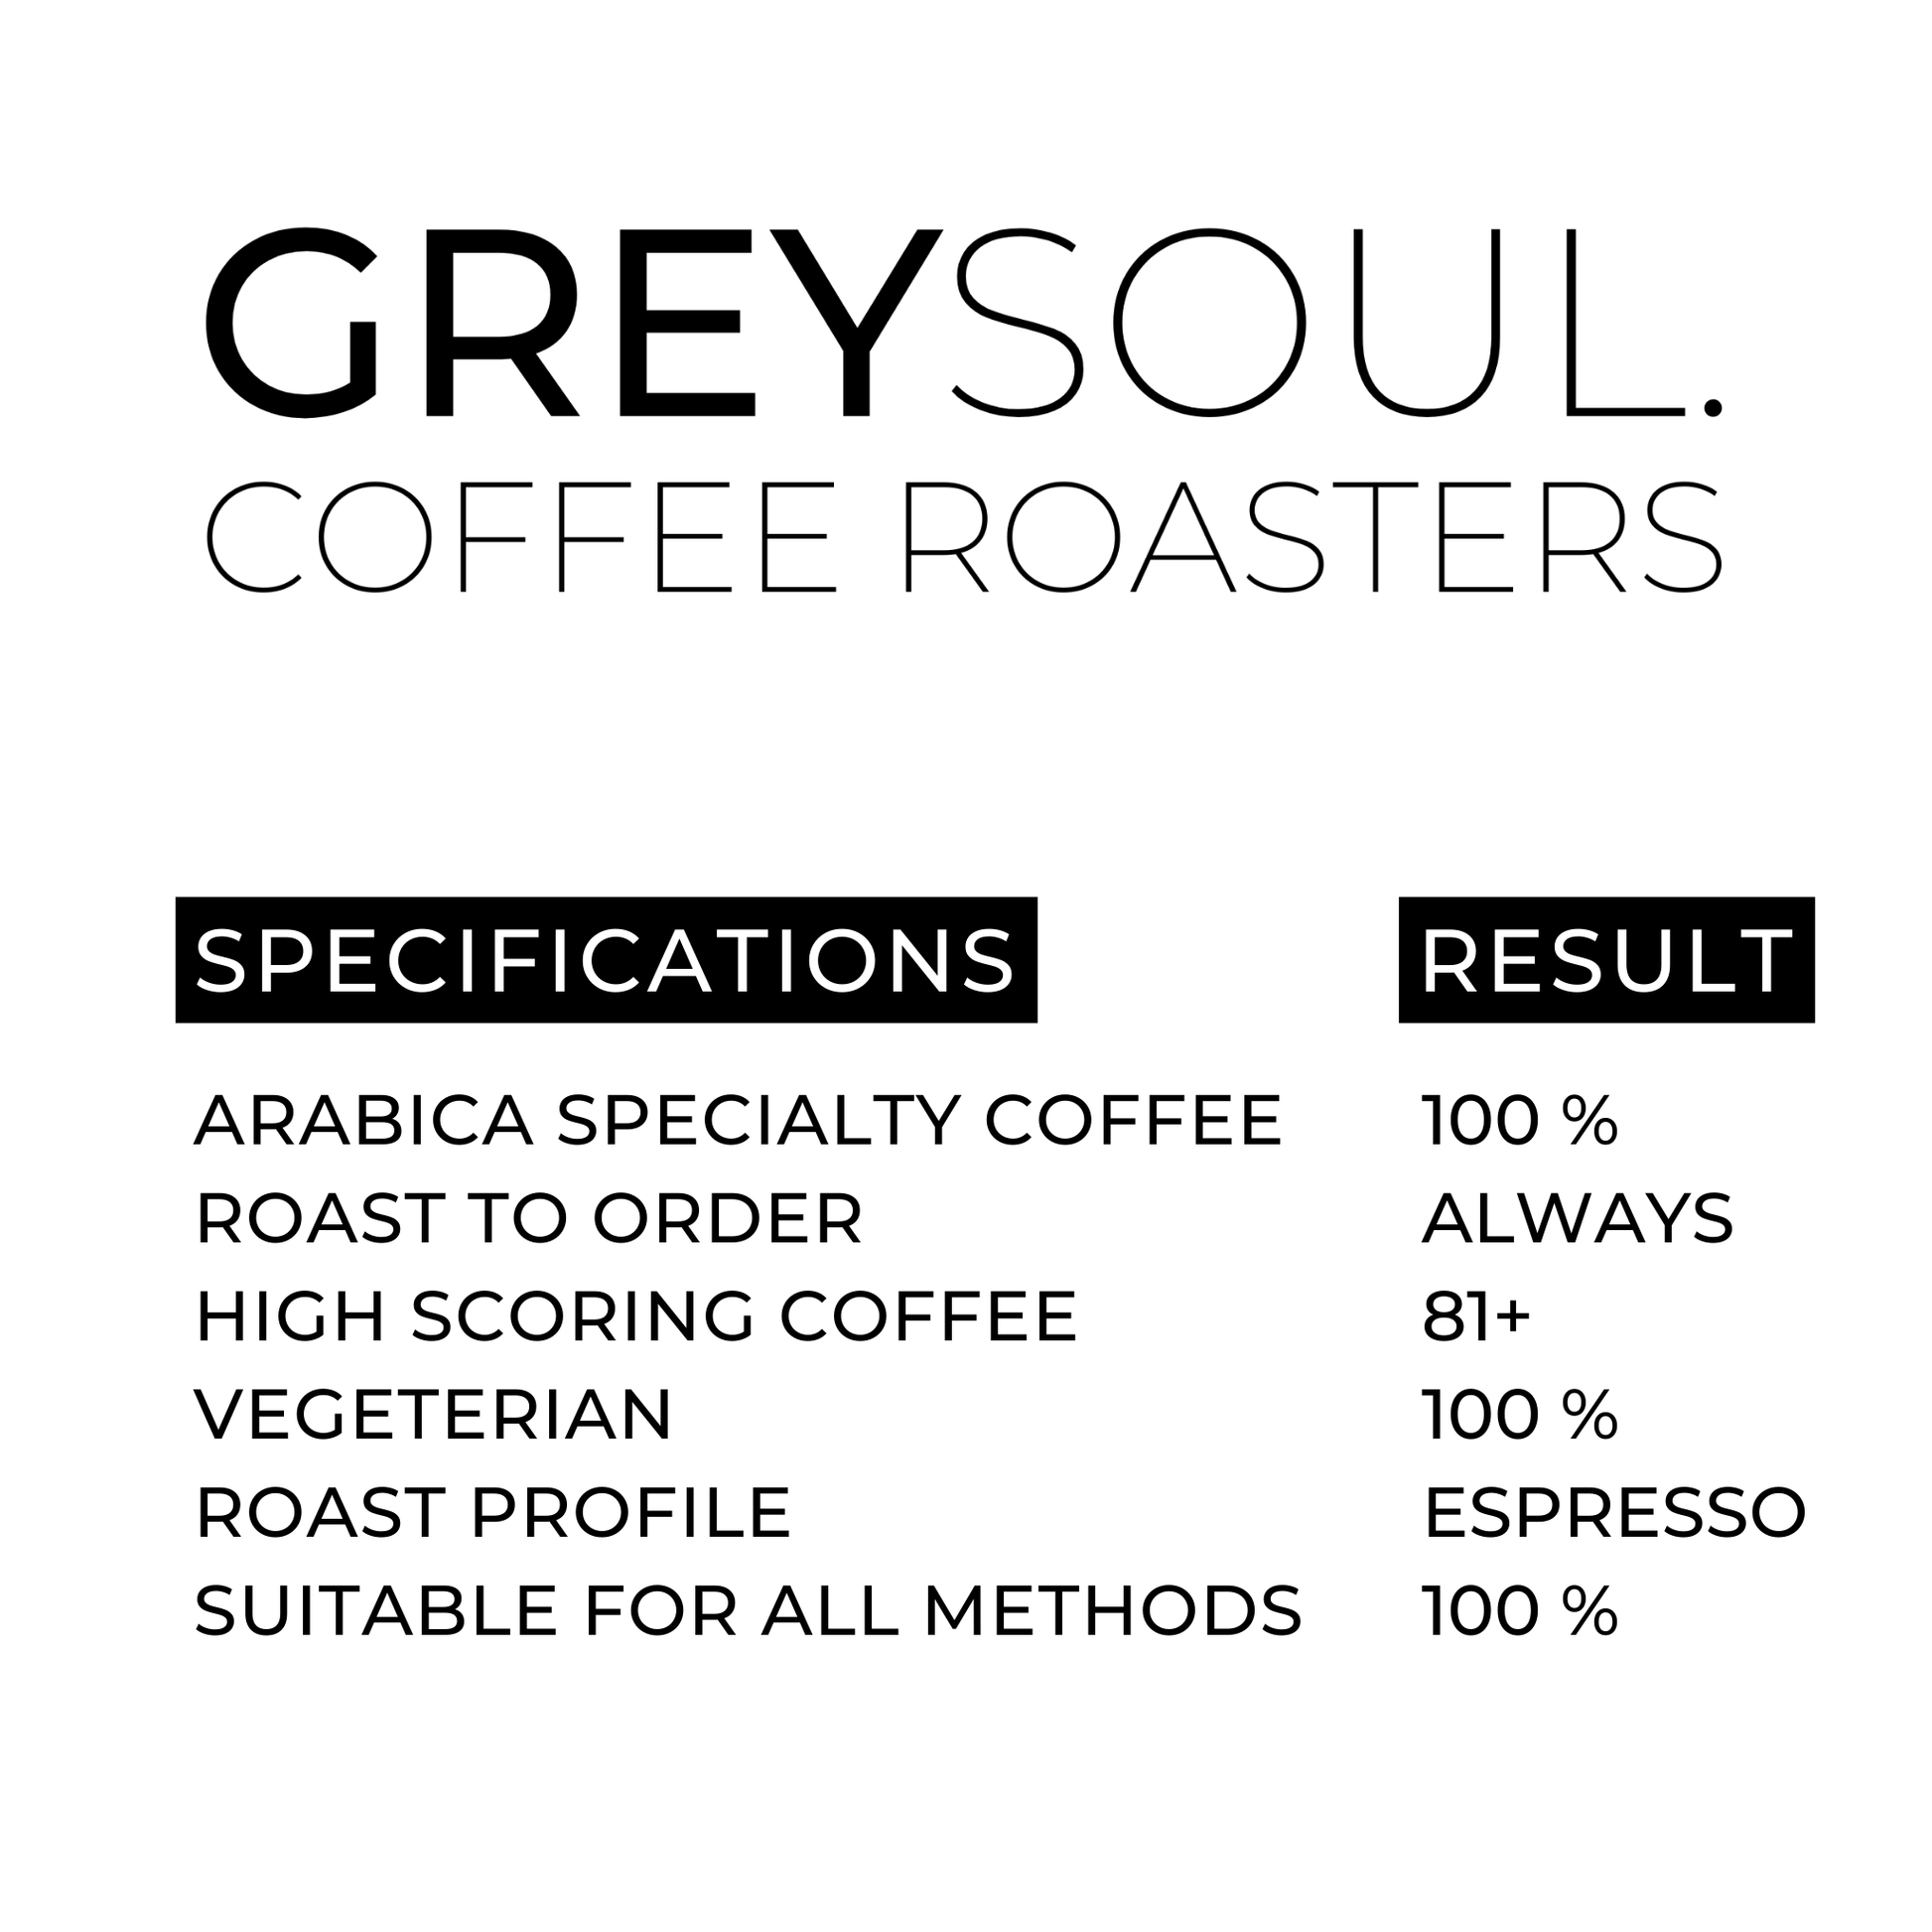 Greysoul Coffee Ground And Whole Beans Arabica Balanced Espresso